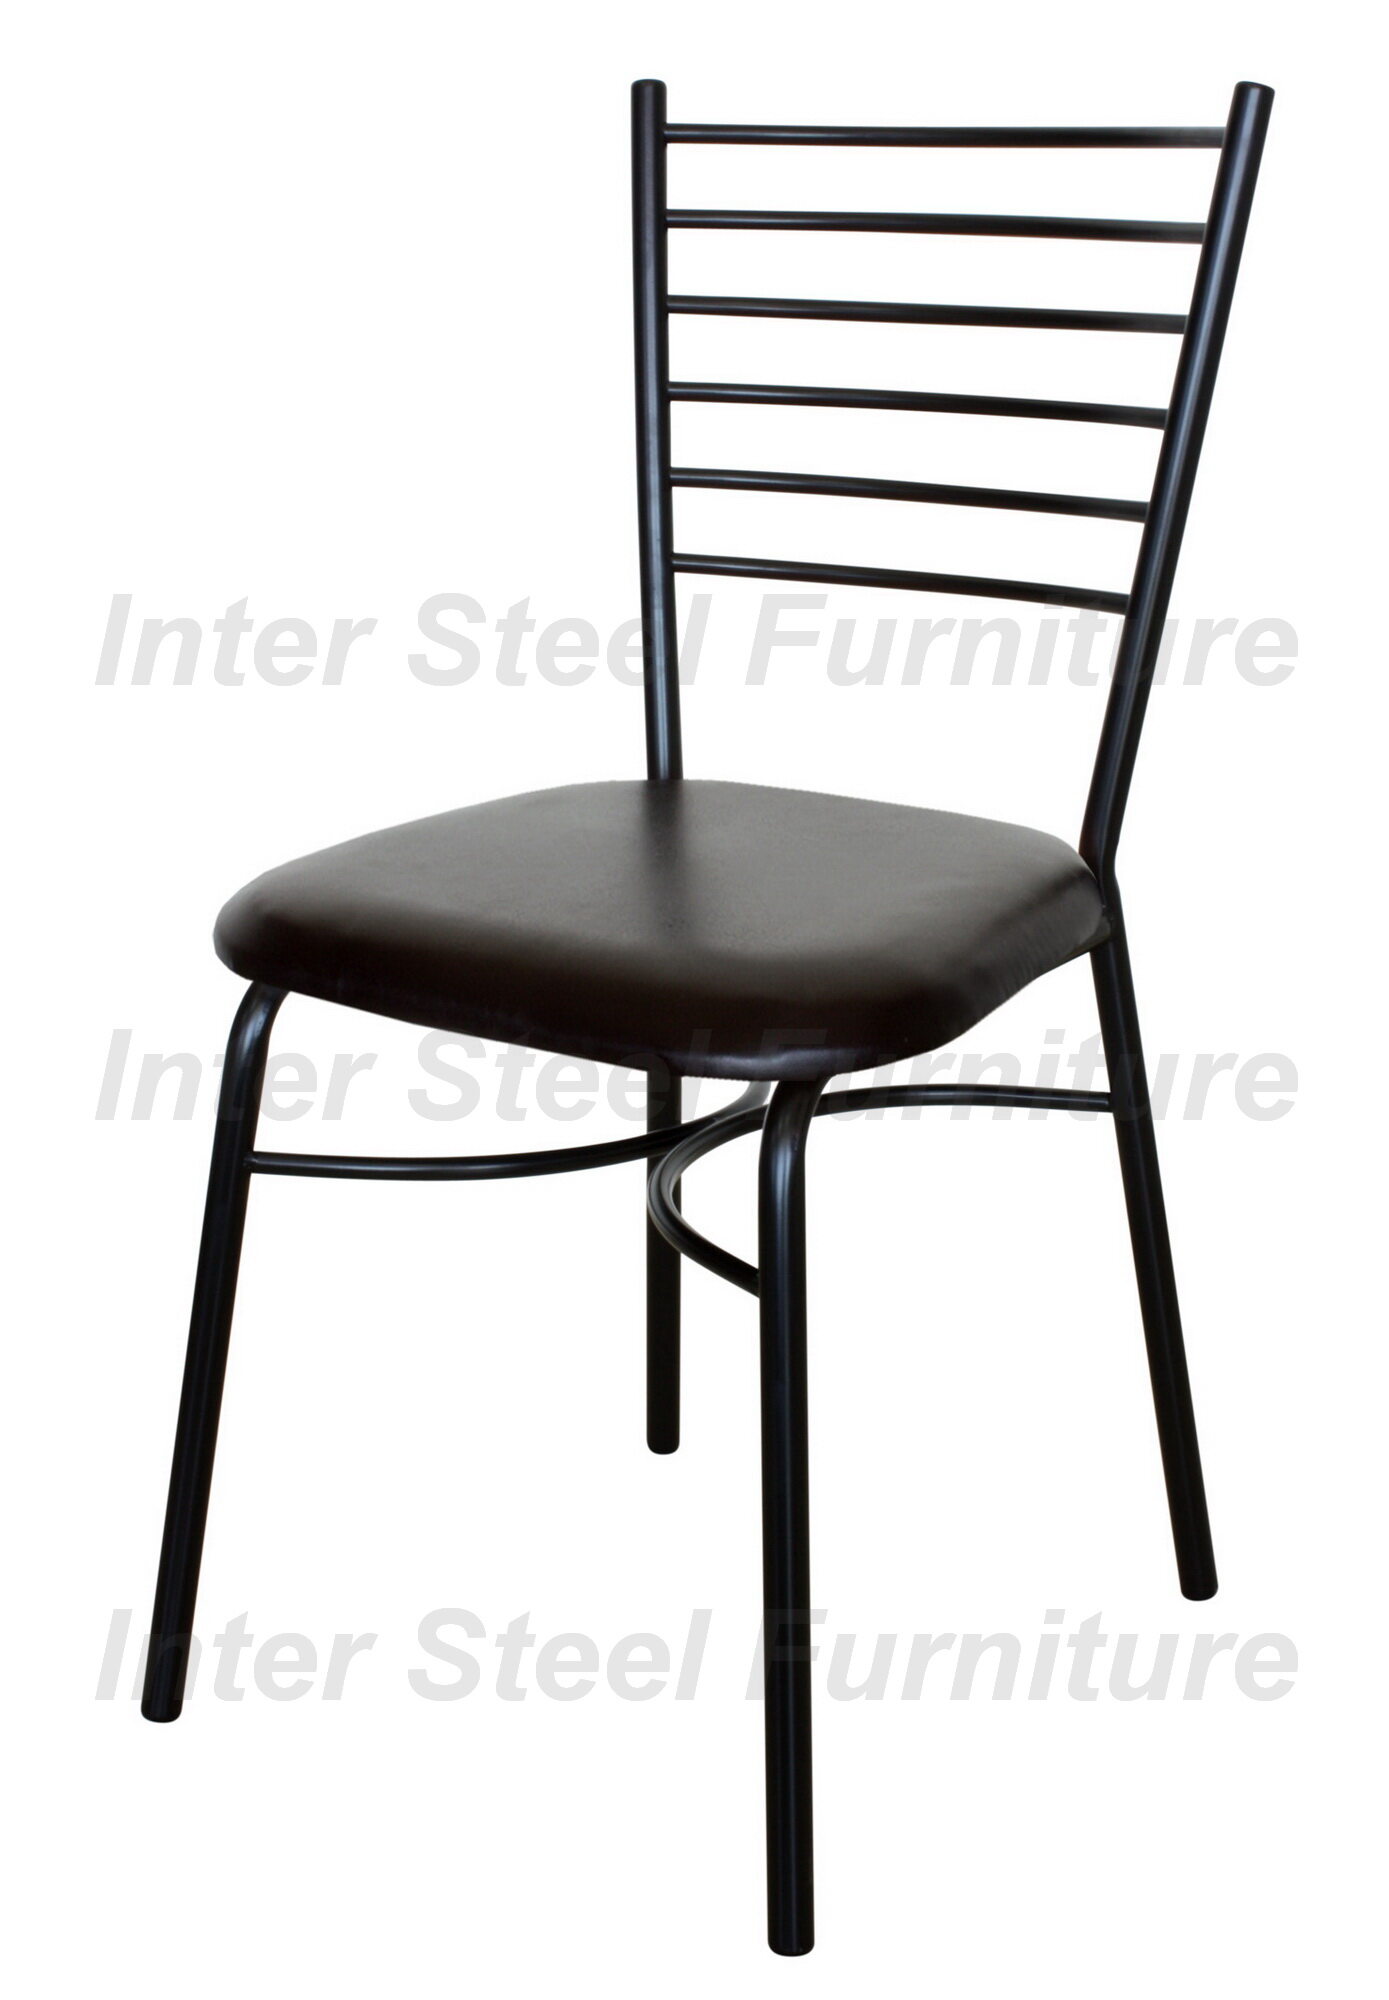 Inter Steel เก้าอี้เหล็ก มีพนักพิง รุ่น CH333# โครงเหล็กสีดำ - เบาะสีดำ Dining chair Black steel frame pvc leather seat